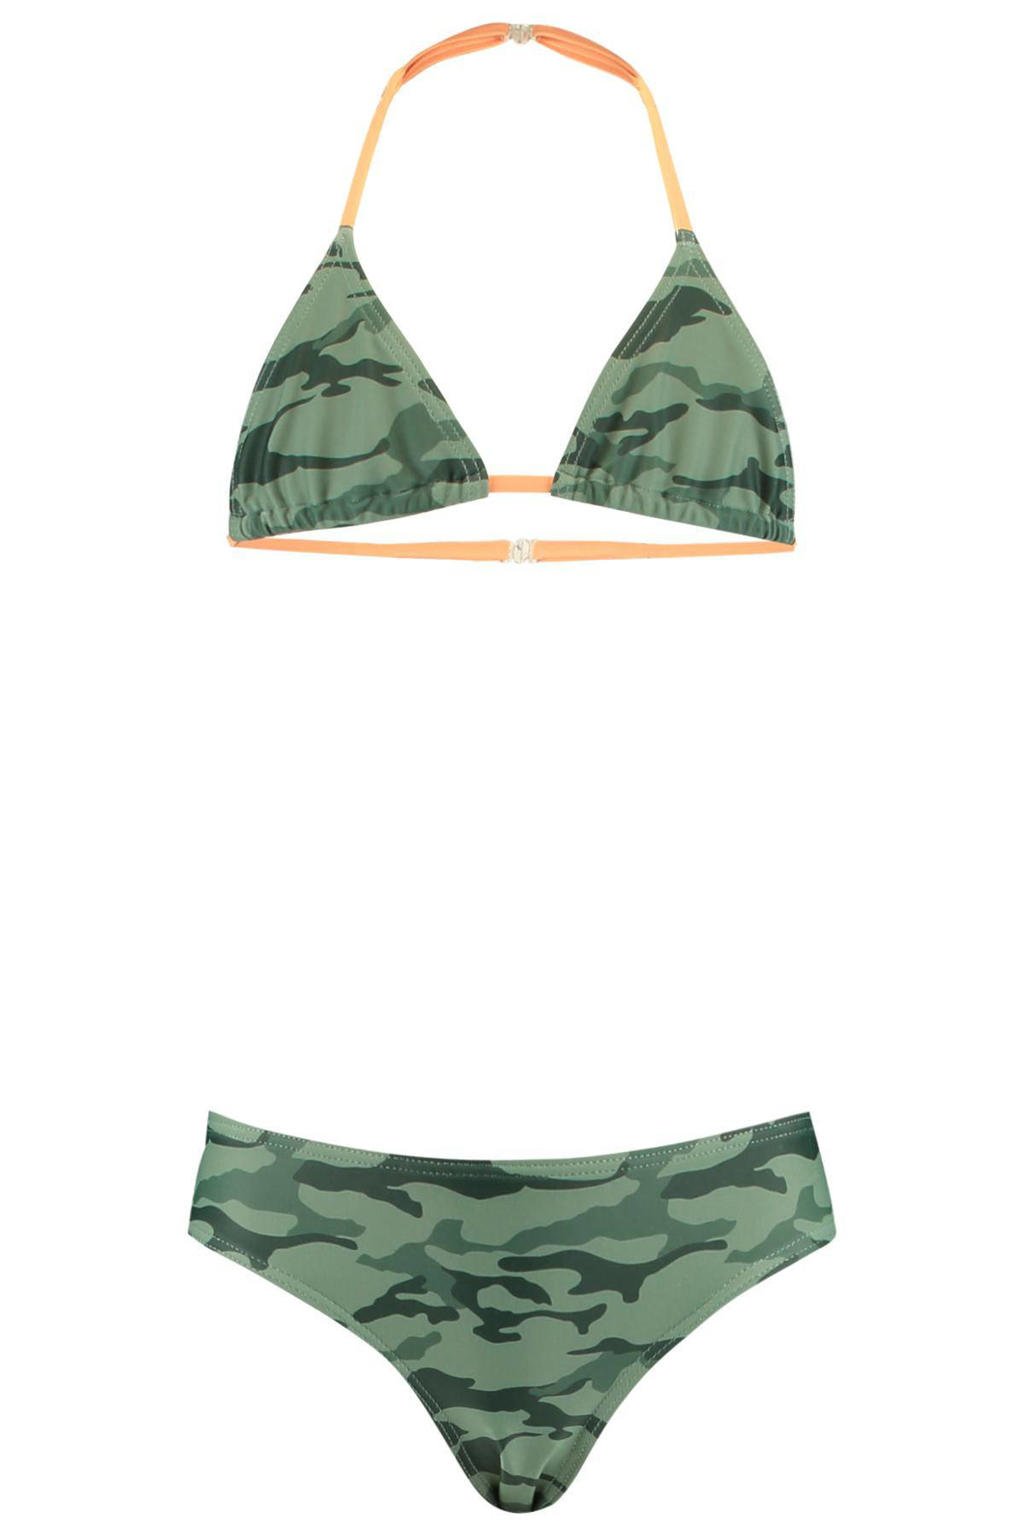 CoolCat Junior triangel bikini Yoella met camouflage print groen/zwart